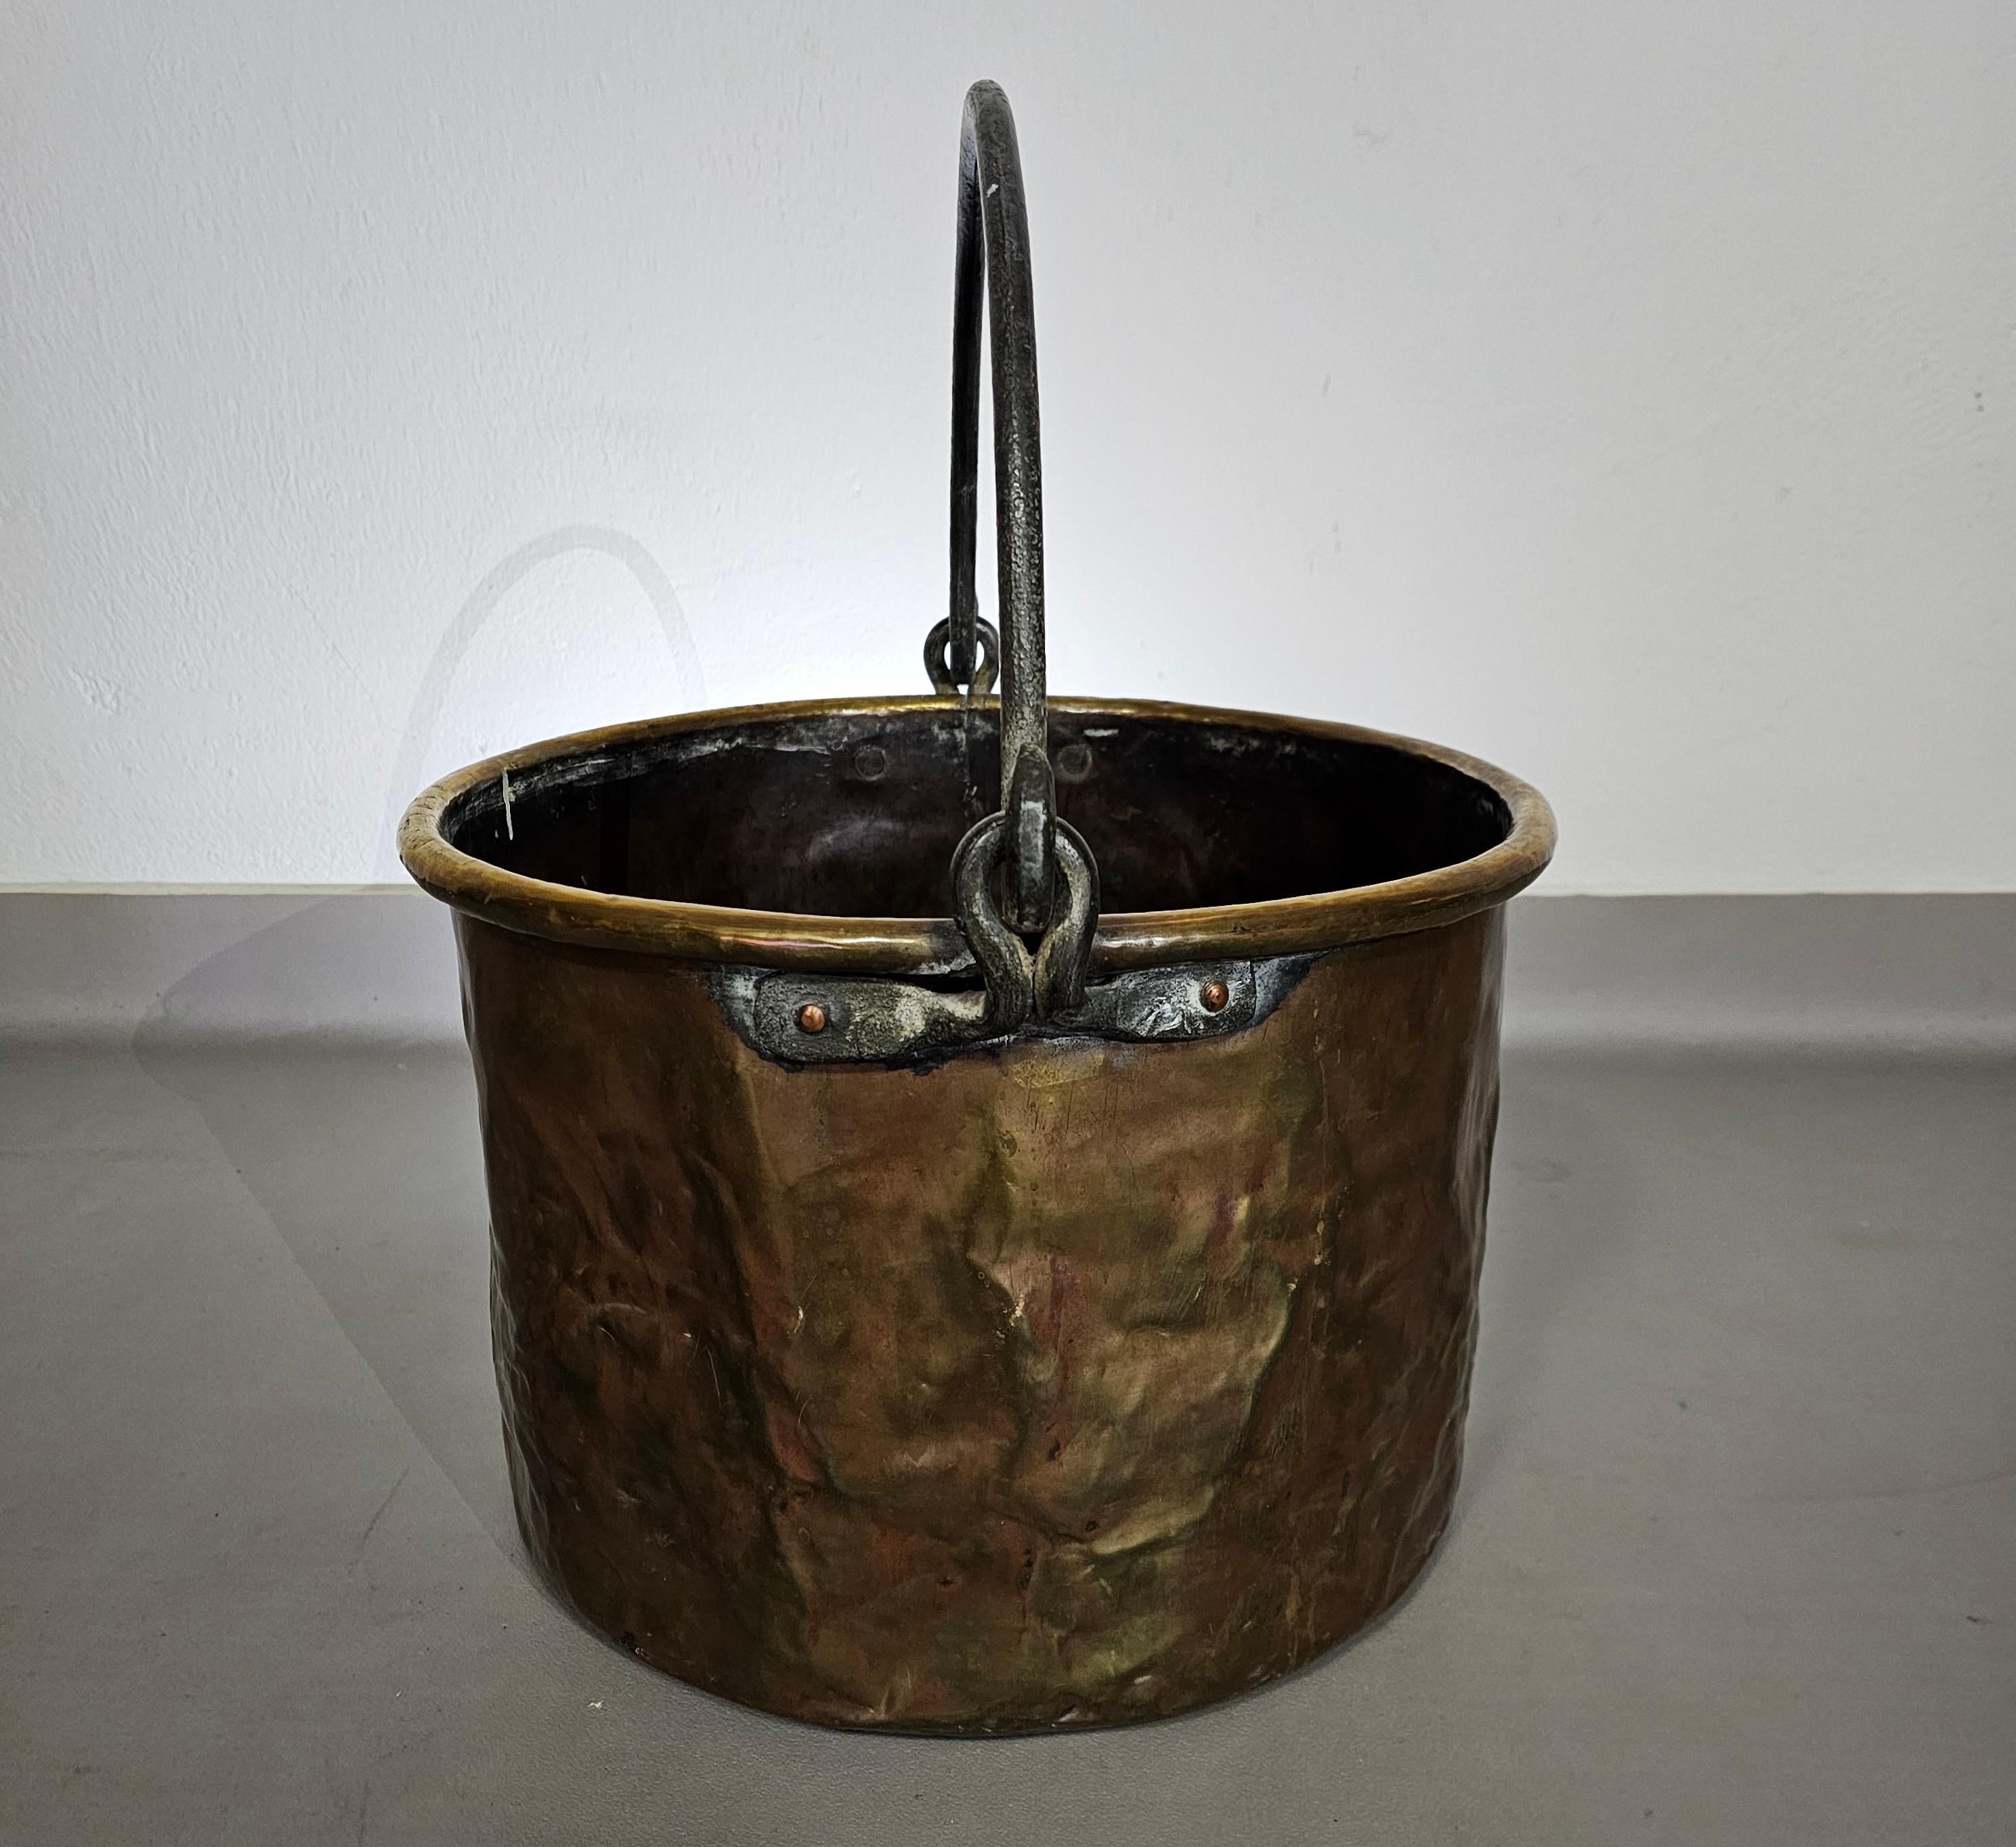  Dutch / Handled Fireplace - Copper / Brass - Bucket  For Sale 3